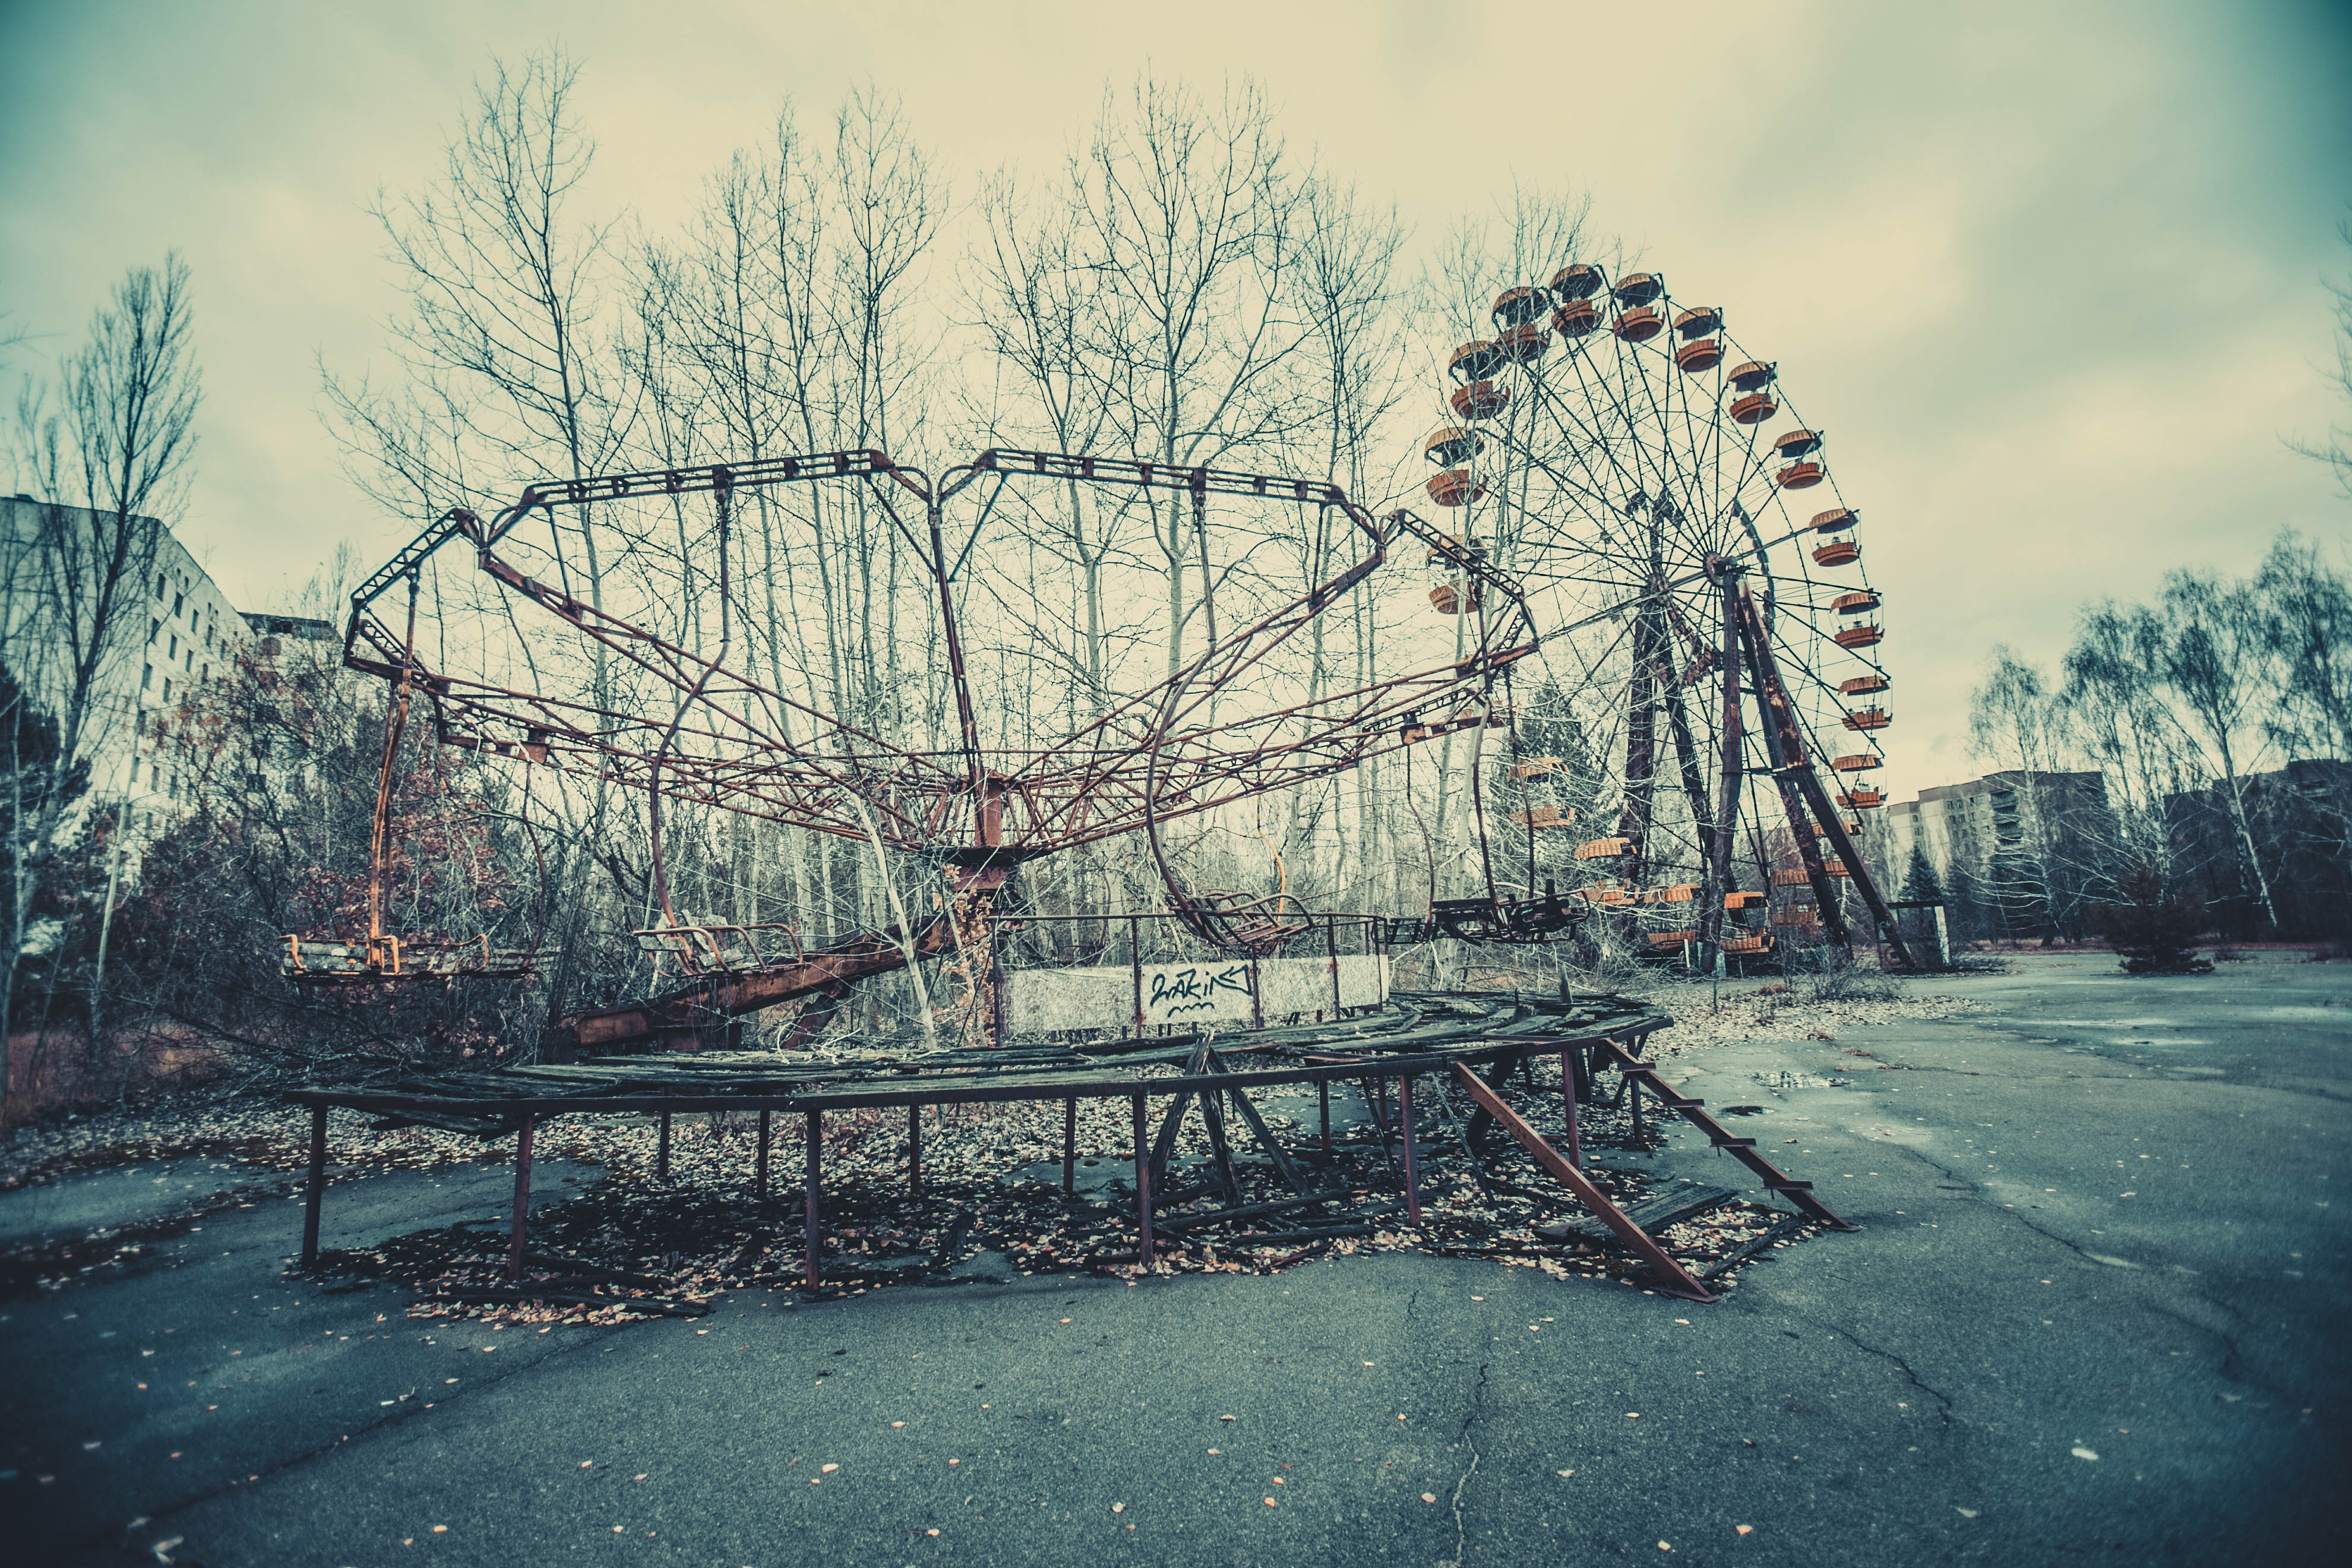 verlaten pretpark nabij Tsjernobyl, Prypjat